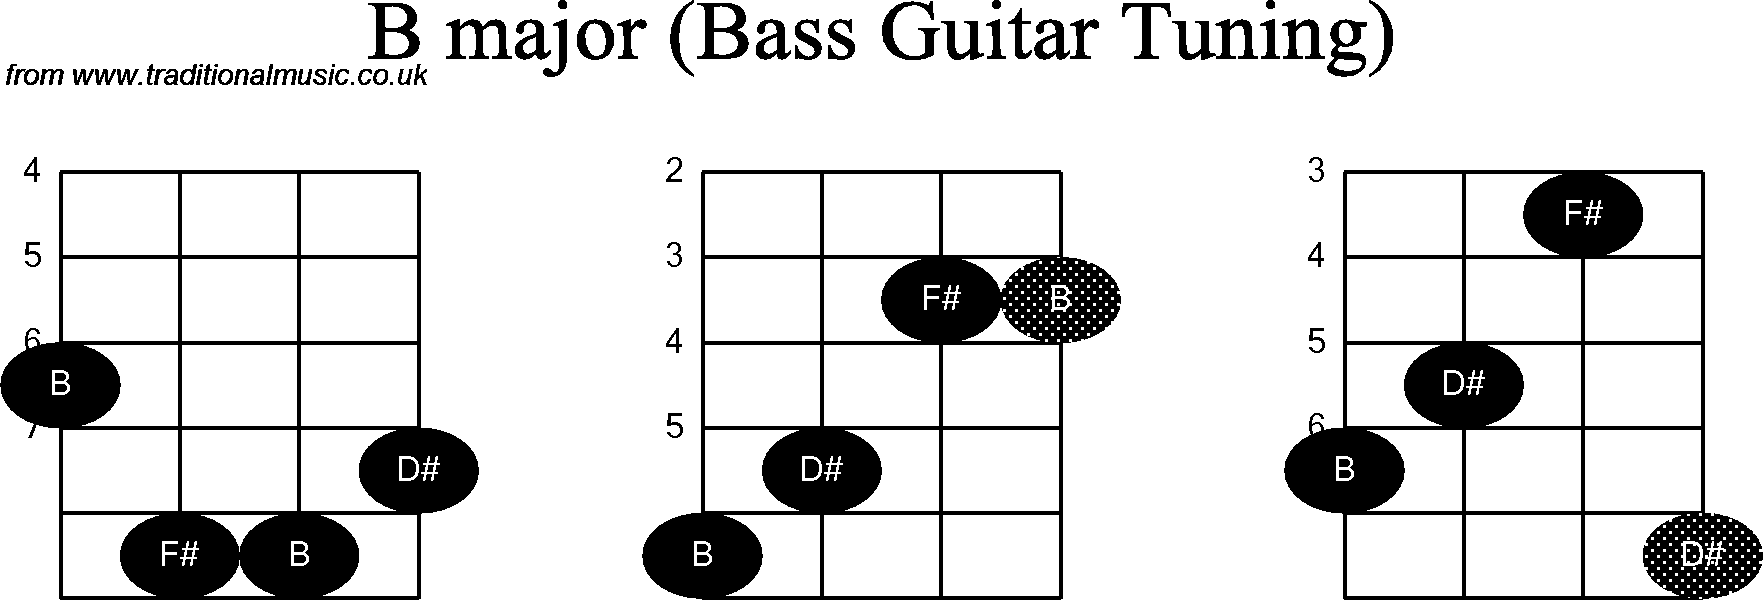 Bass Guitar chord charts for: B